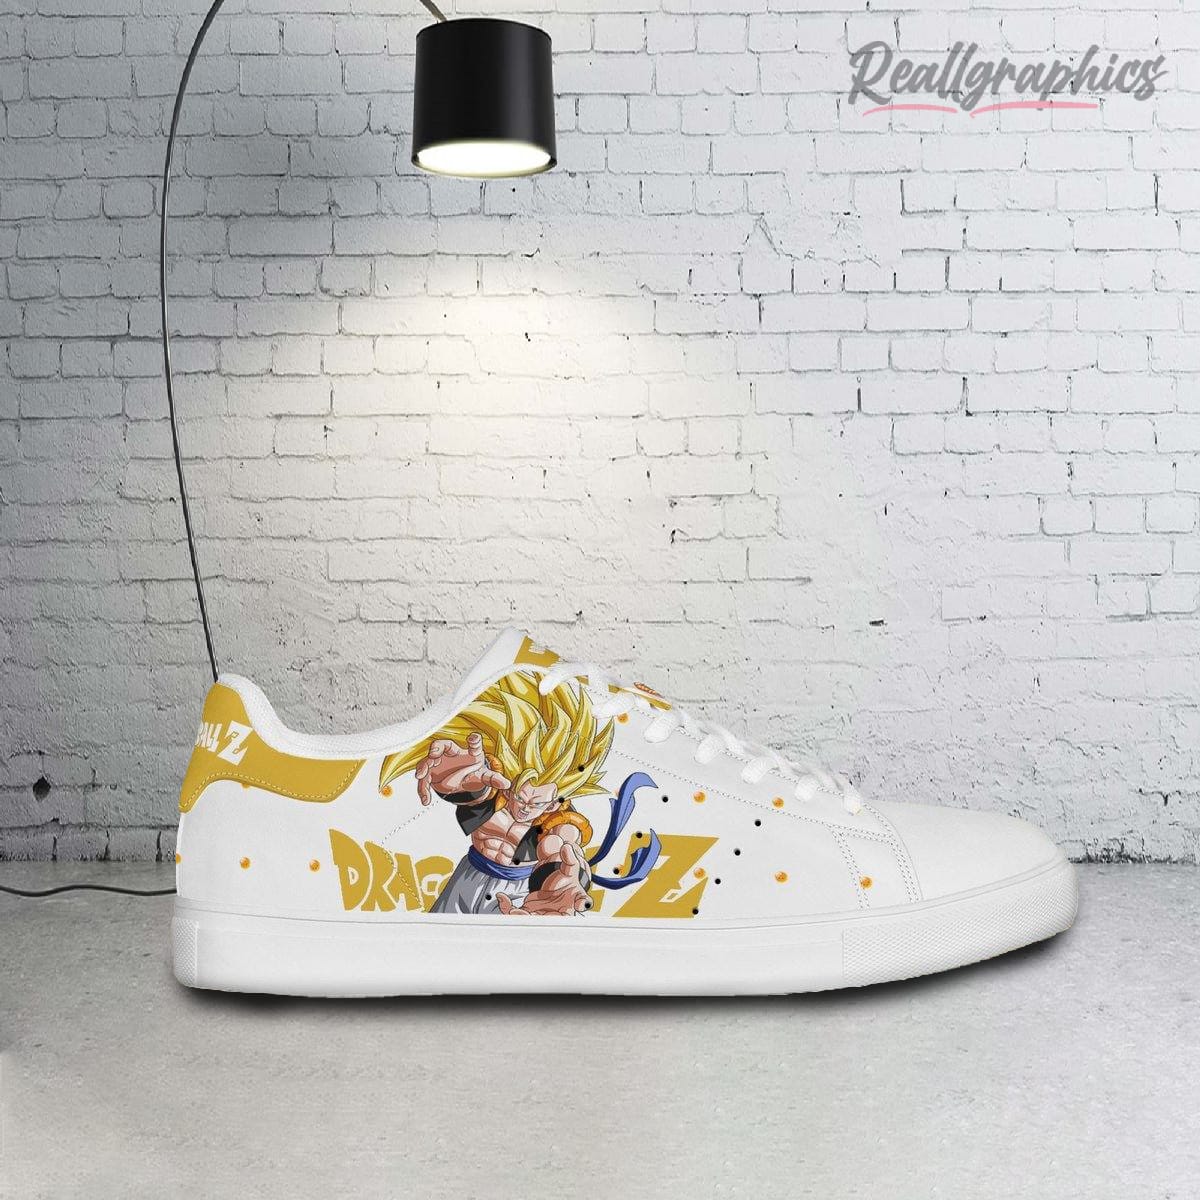 Frieza Black Jordan 1 Sneaker Boots, Limited Edition Dragon Ball Anime  Shoes - Reallgraphics